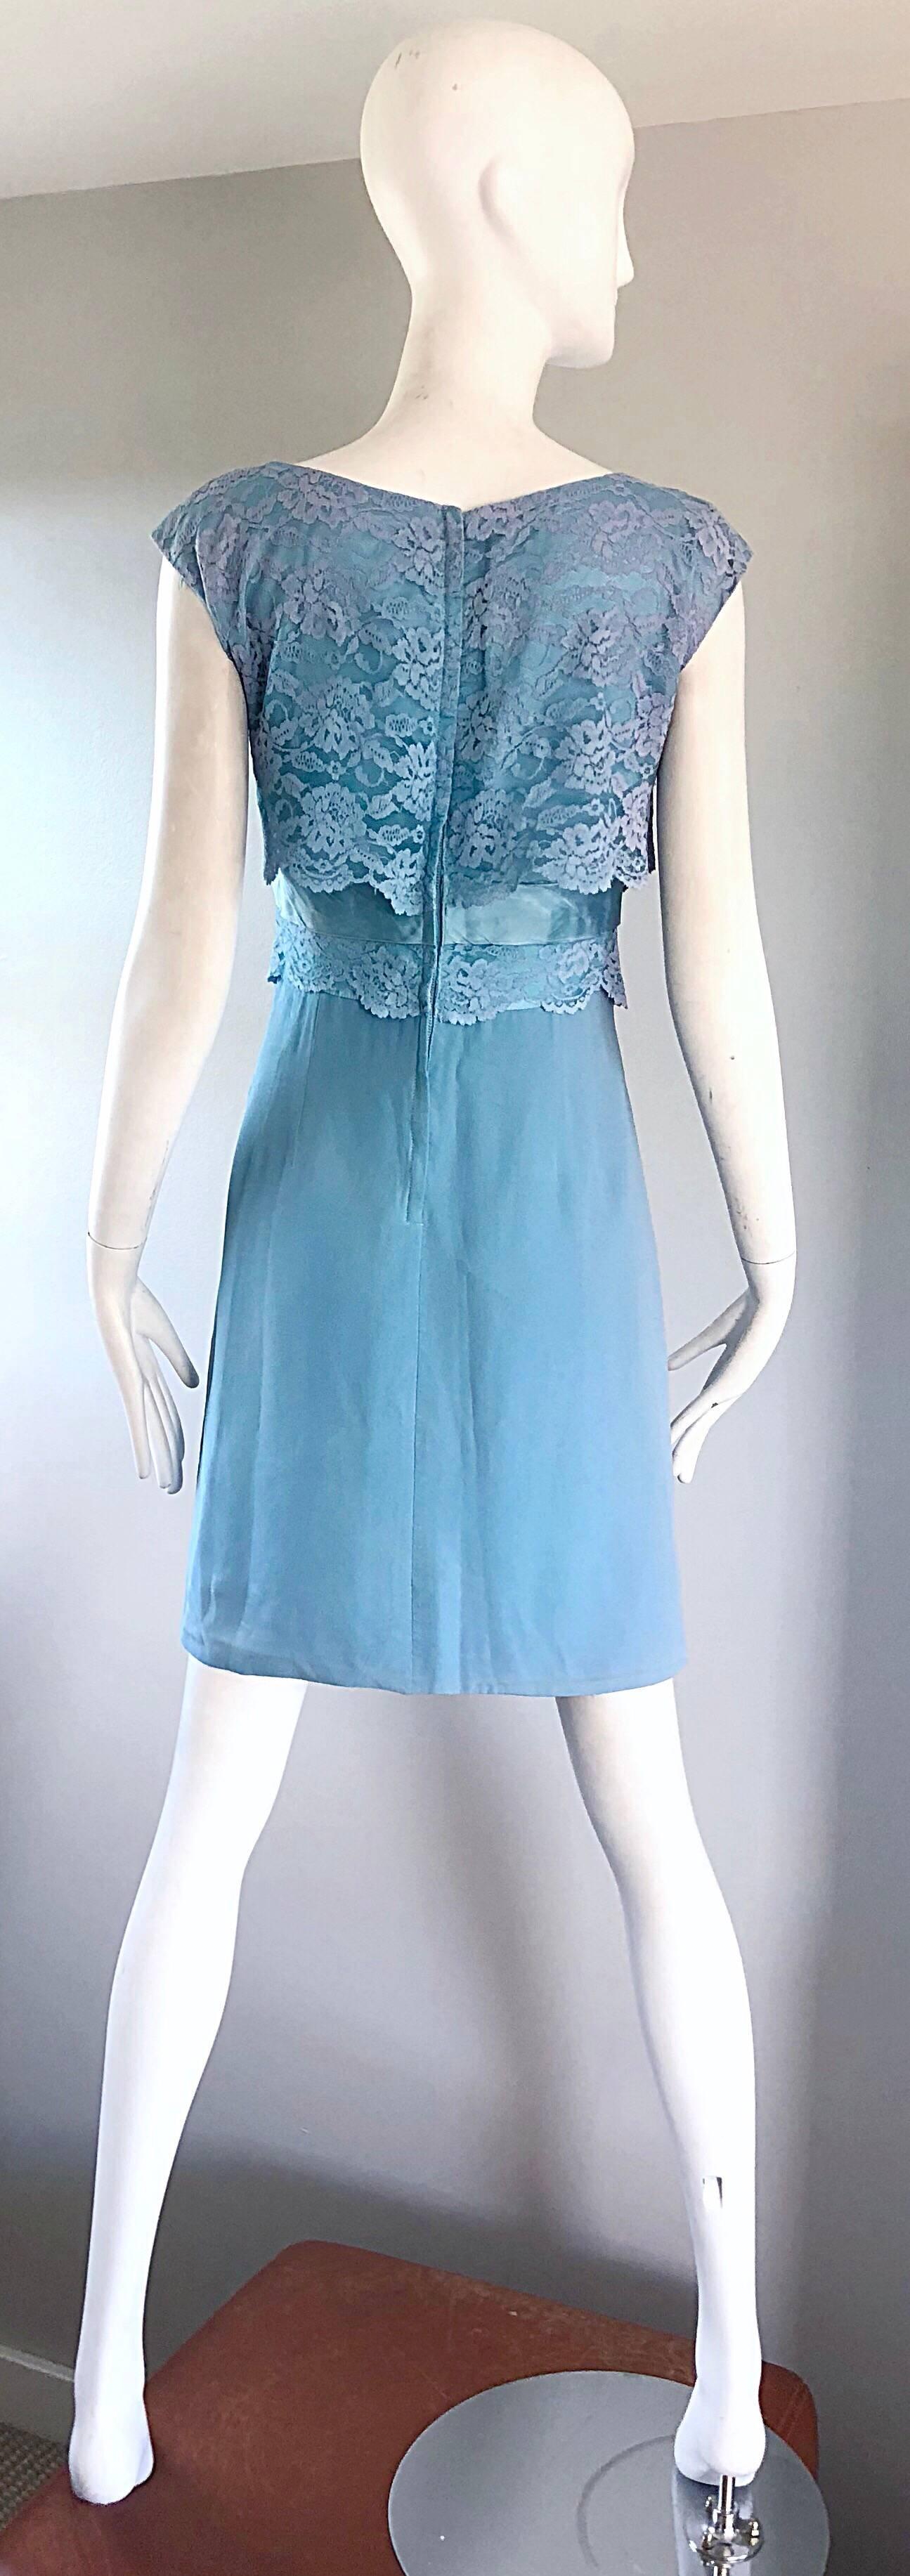 60s blue dress